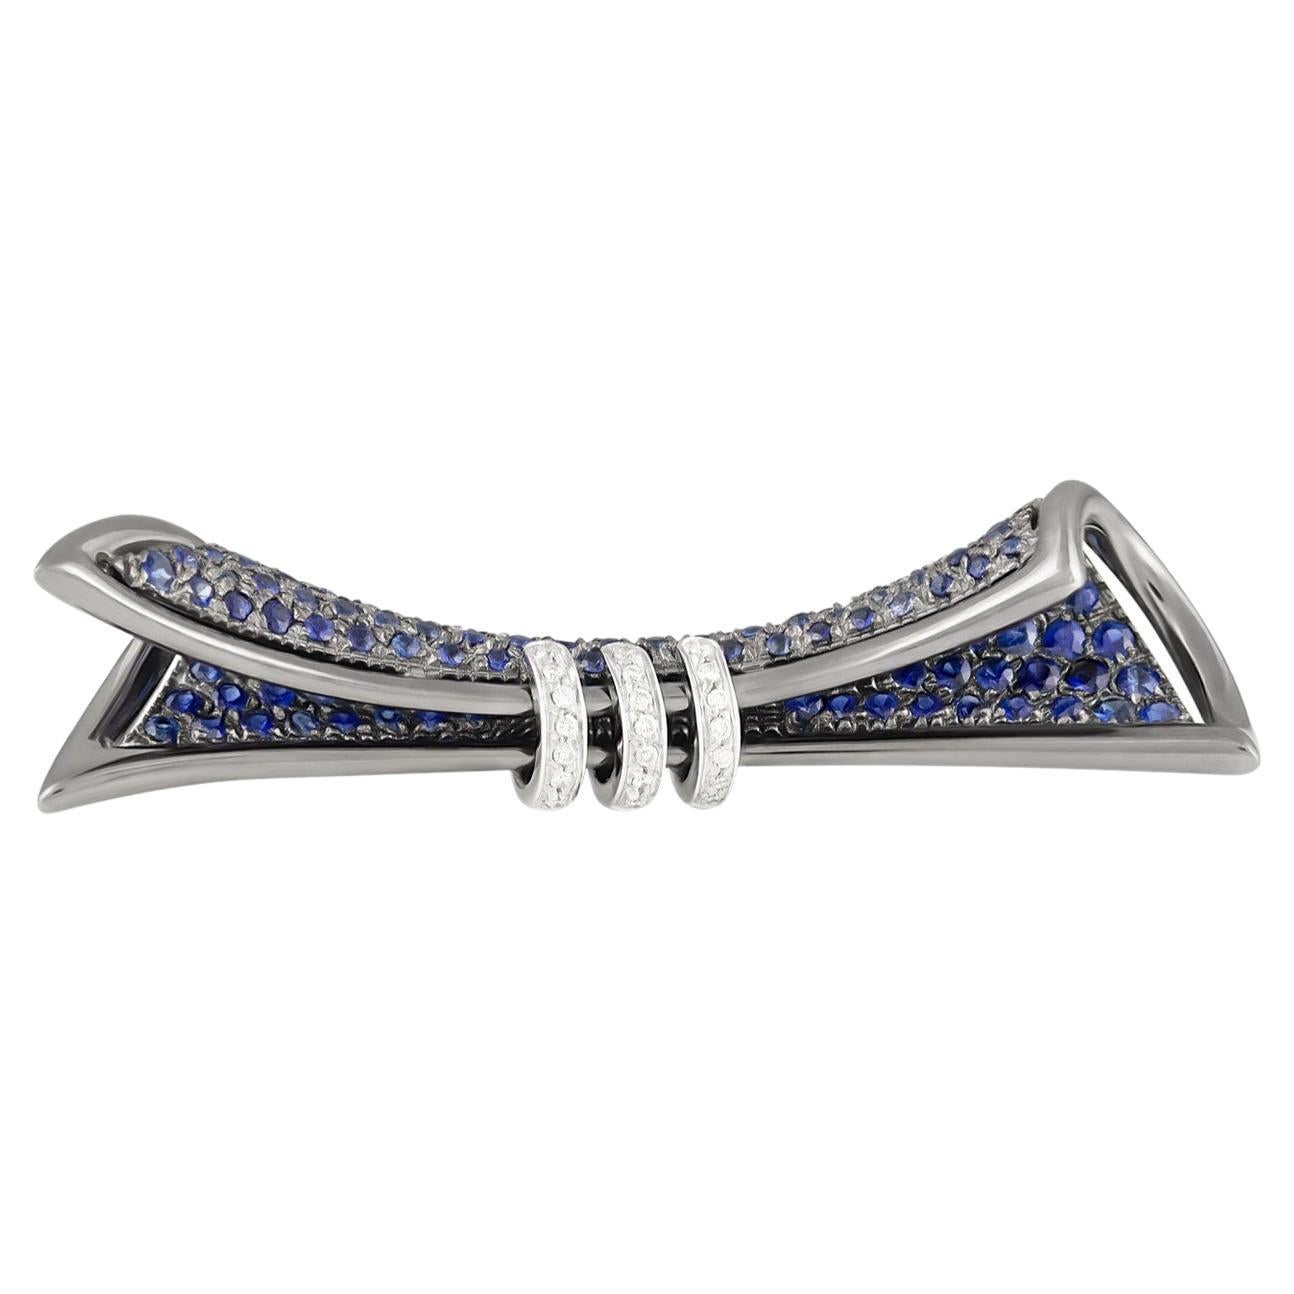 Stefan Hafner Pin
18K Black Rhodium
Diamond: 0.09ctw
Sapphire: 1.25ctw
Italian made
Retail price: $6,200.00
SKU: BLU01387